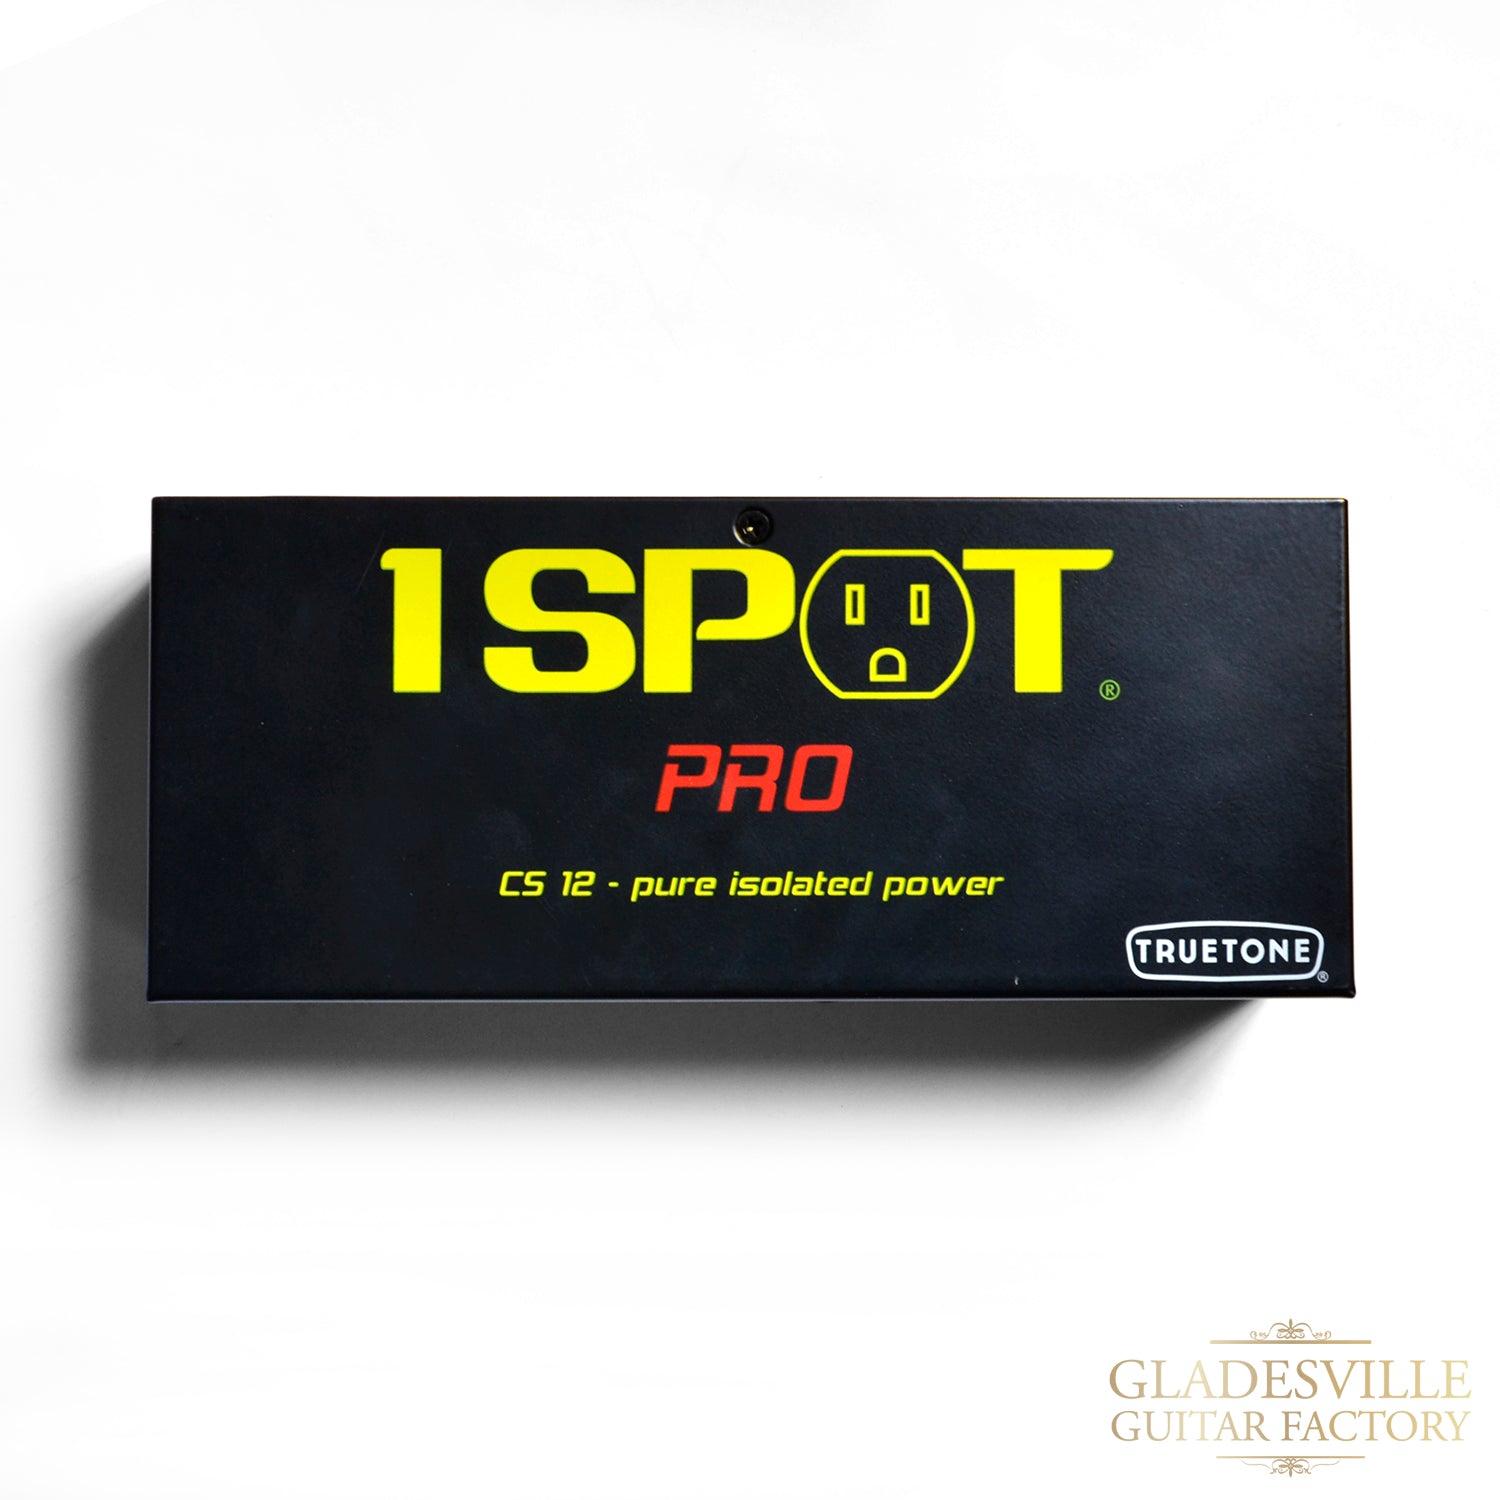 1 Spot Pro CS12 Power Supply